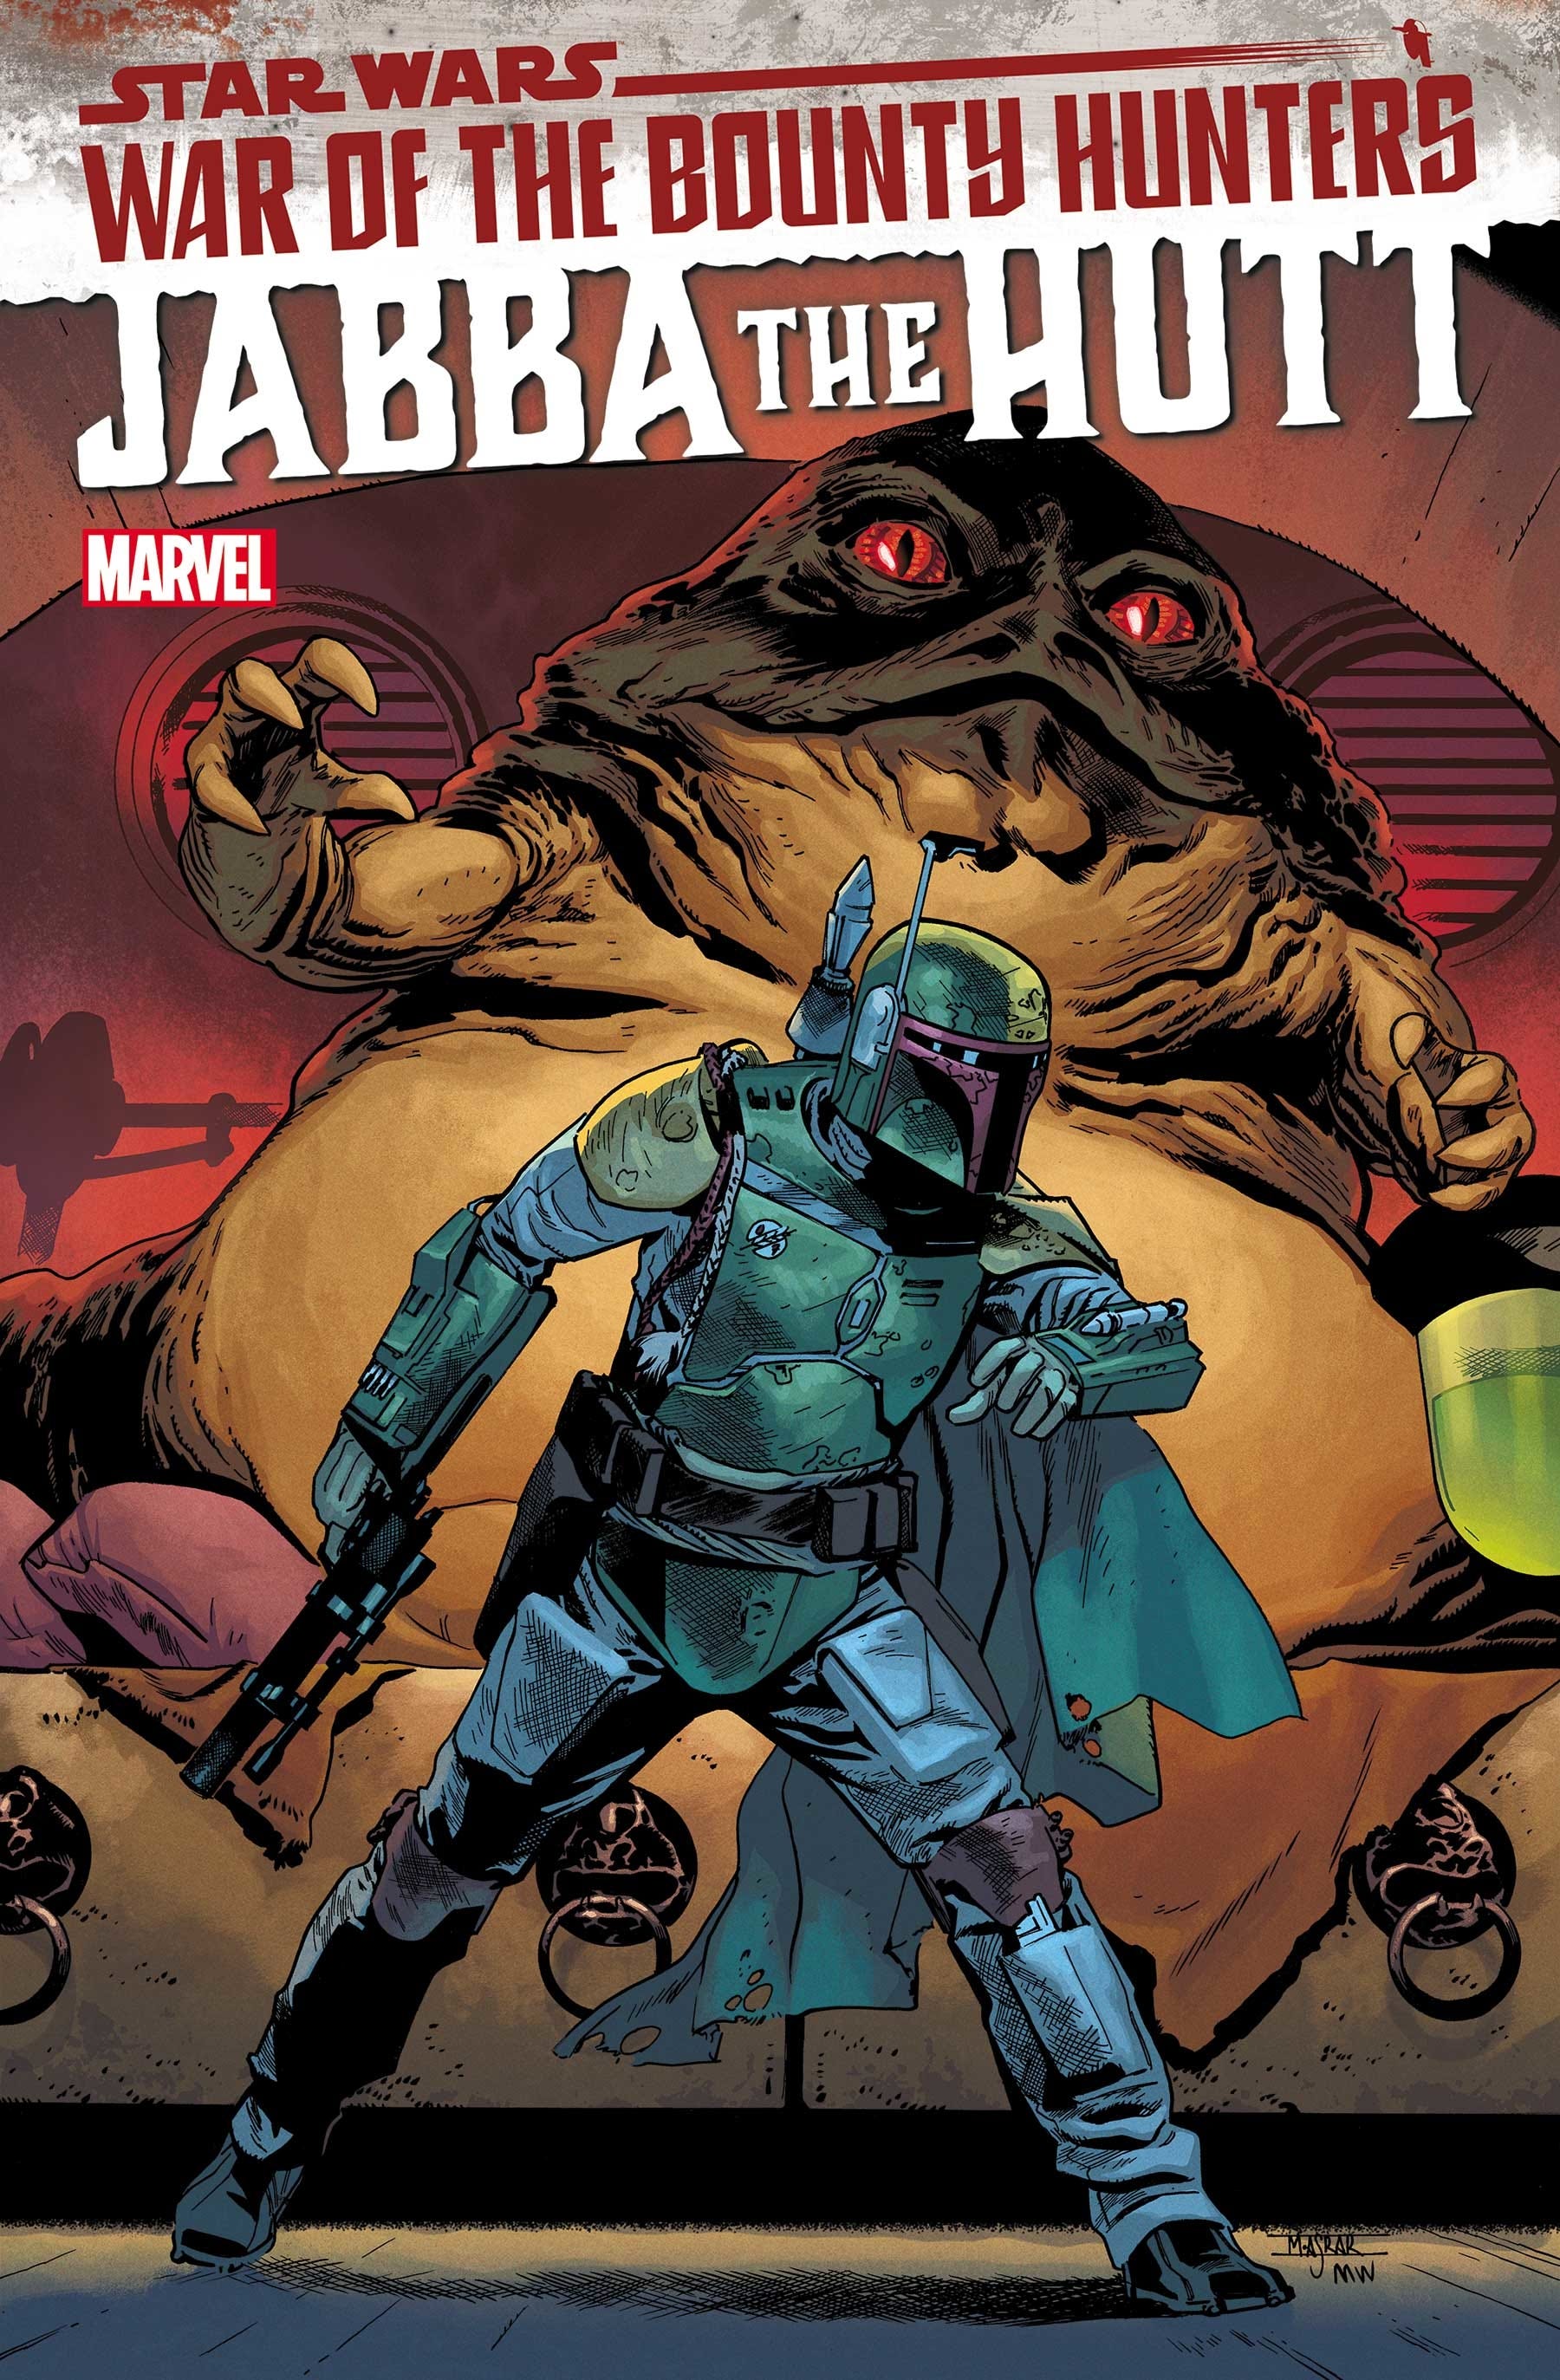 Star Wars War of the Bounty Hunters Jabba Hutt #1